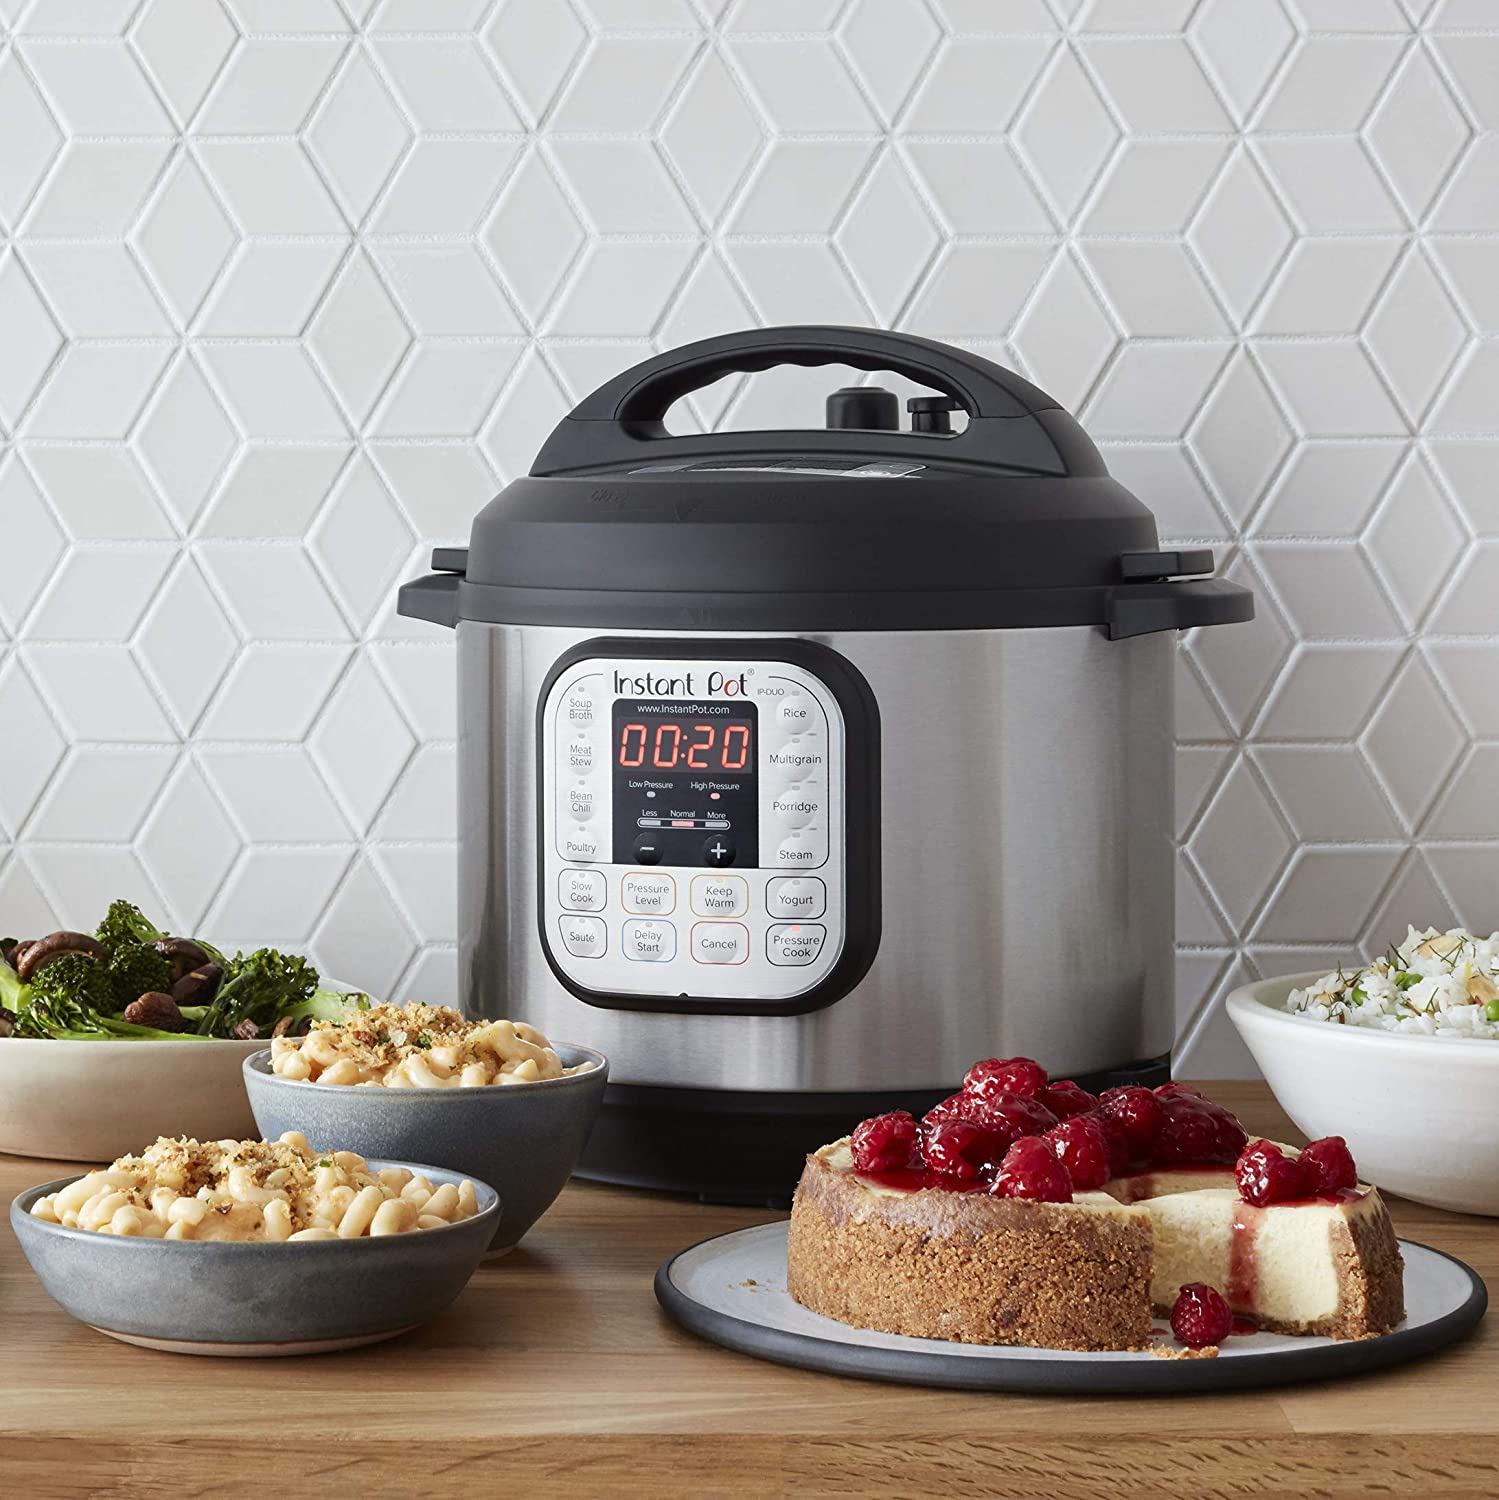 https://www.digitaltrends.com/wp-content/uploads/2020/05/instant-pot-duo-7-in-1-electric-pressure-cooker-1.jpg?p=1